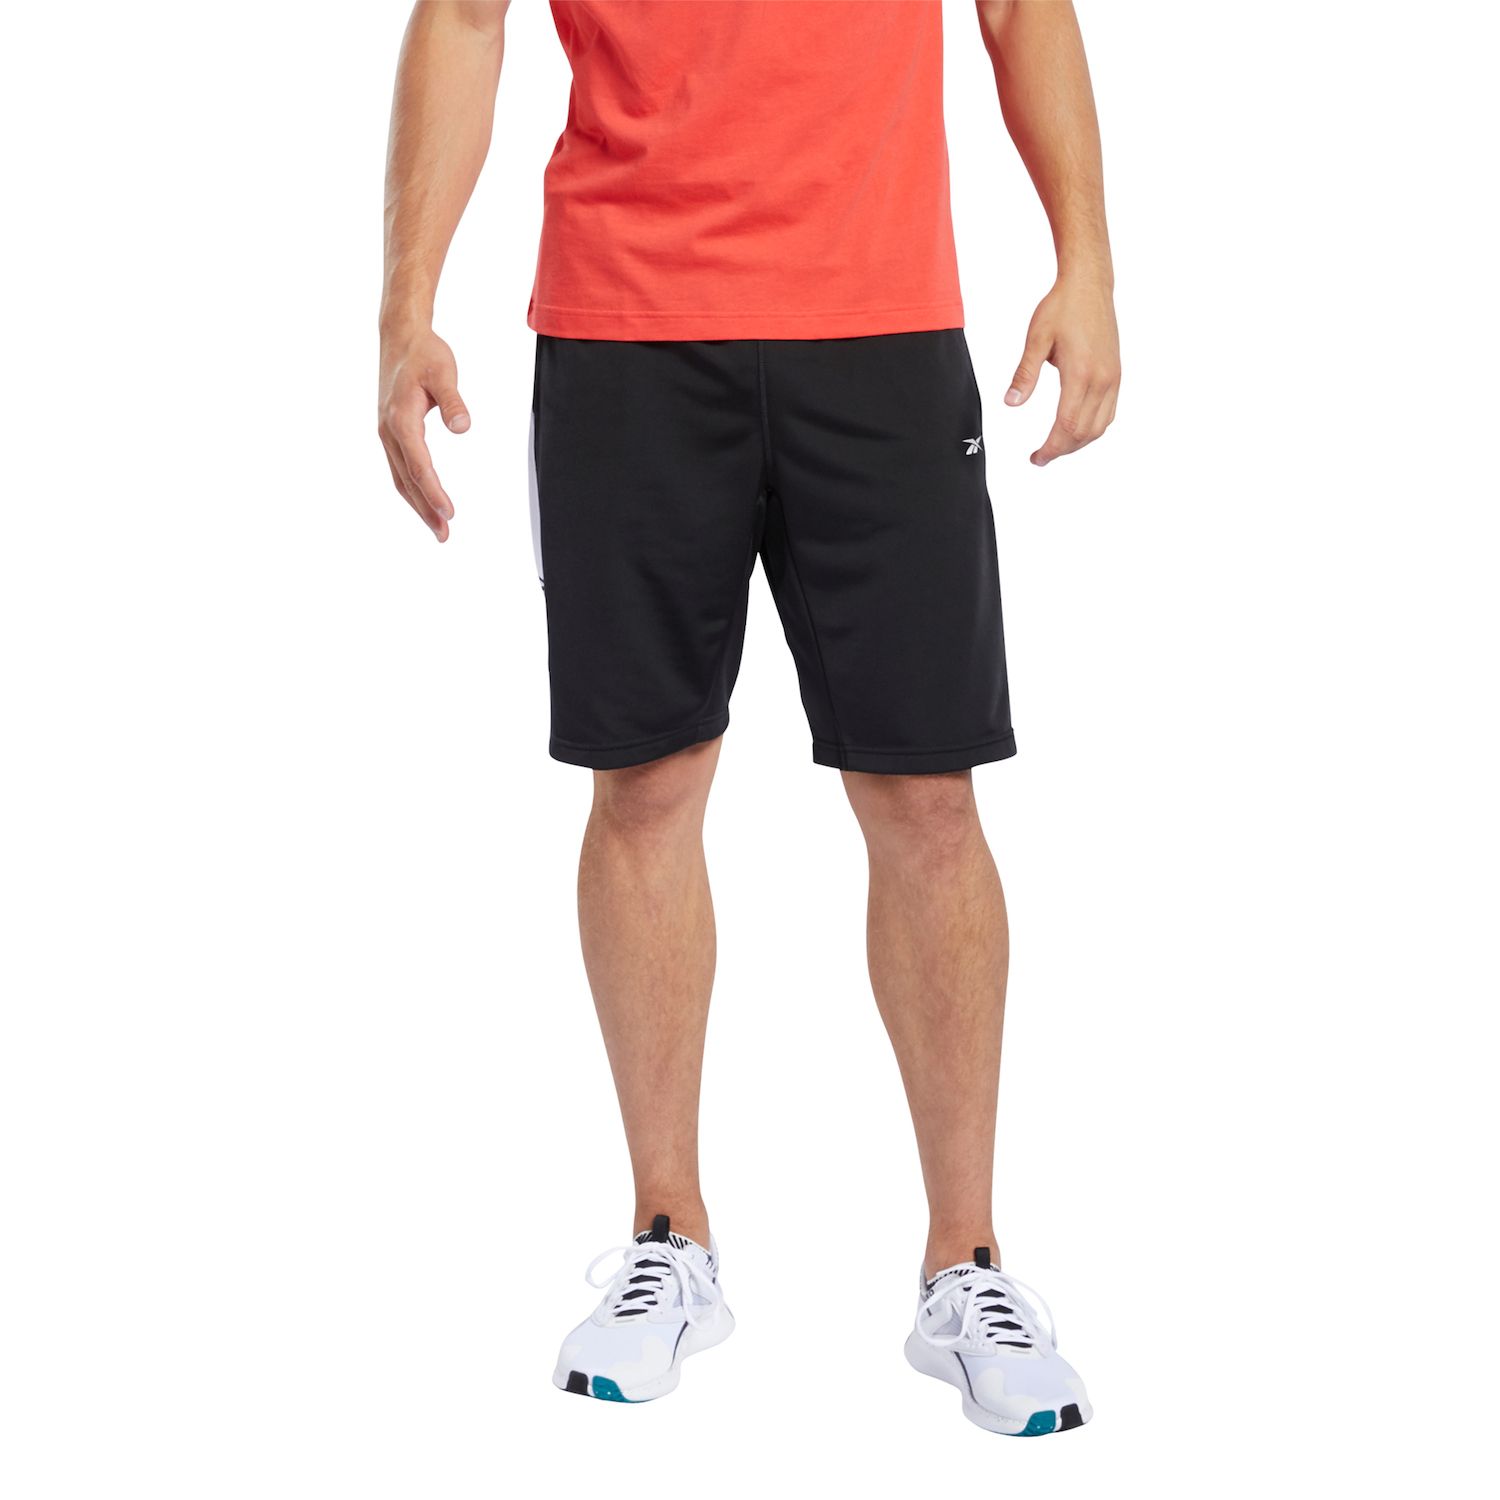 reebok men's vector performance training shorts